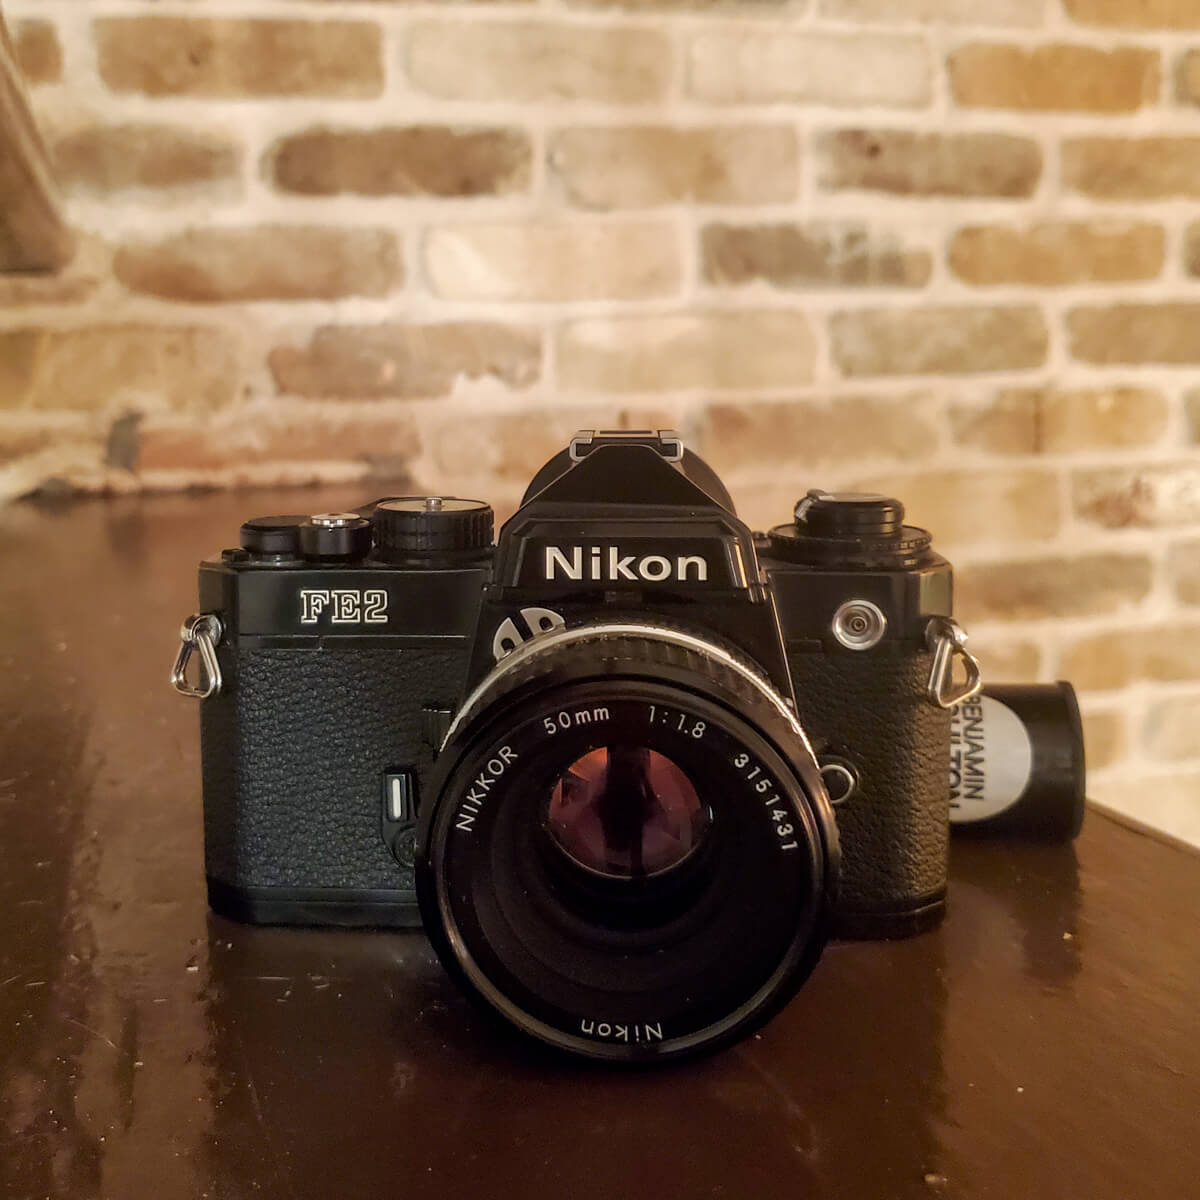 Nikon FE2 and Nikkor 50mm f/1.8